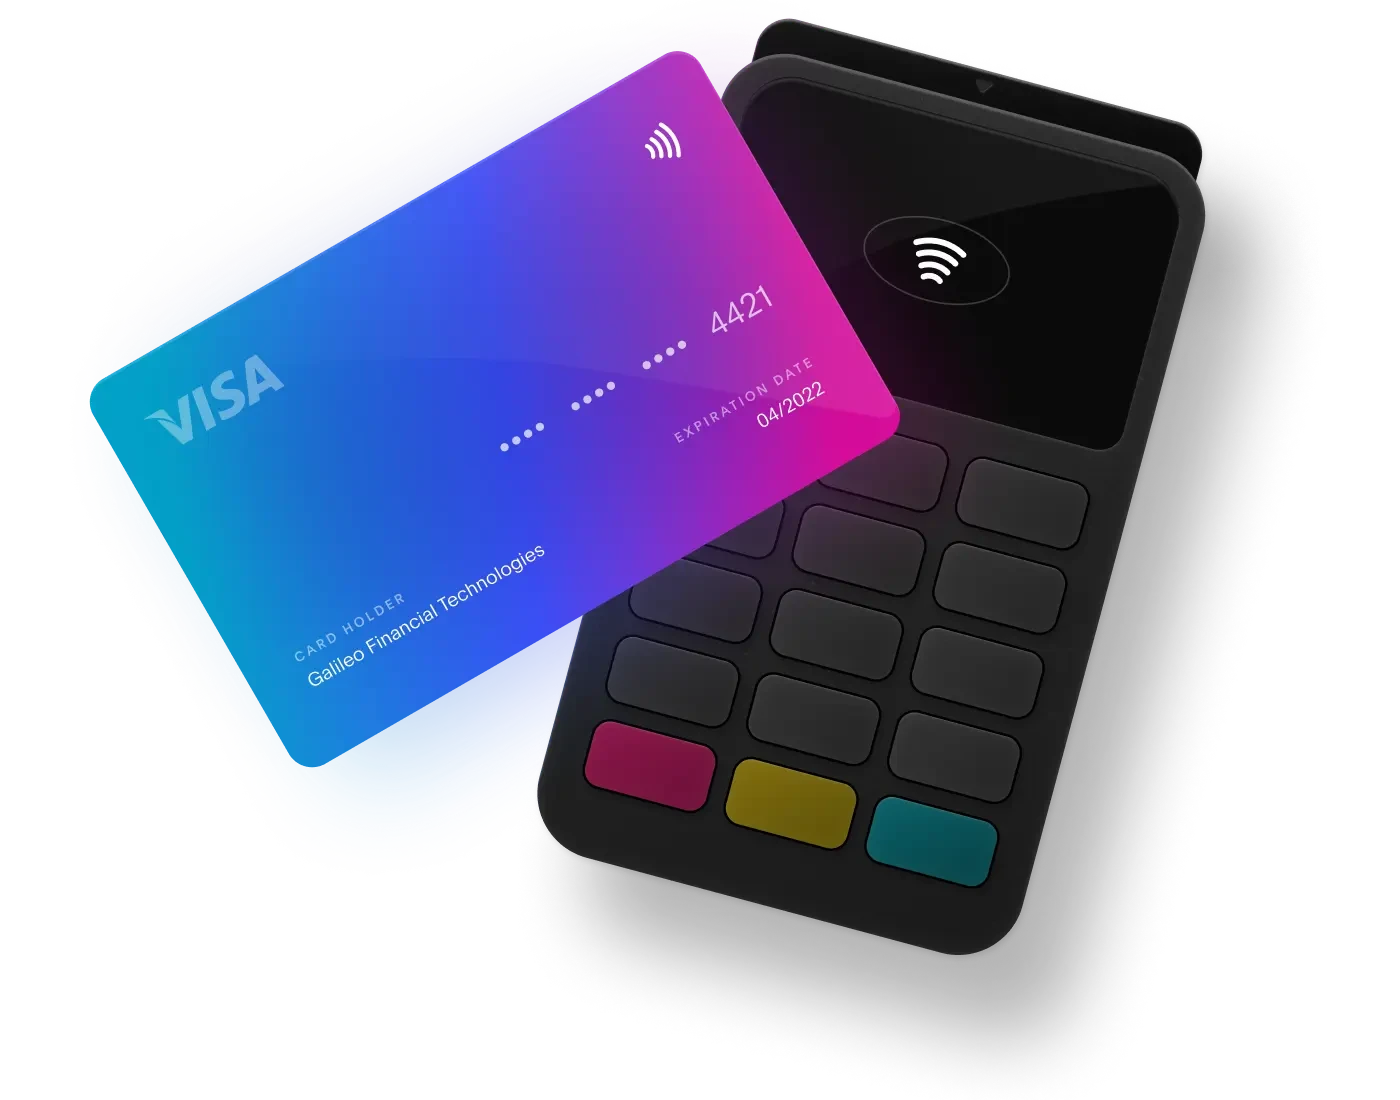 credit card and card reader